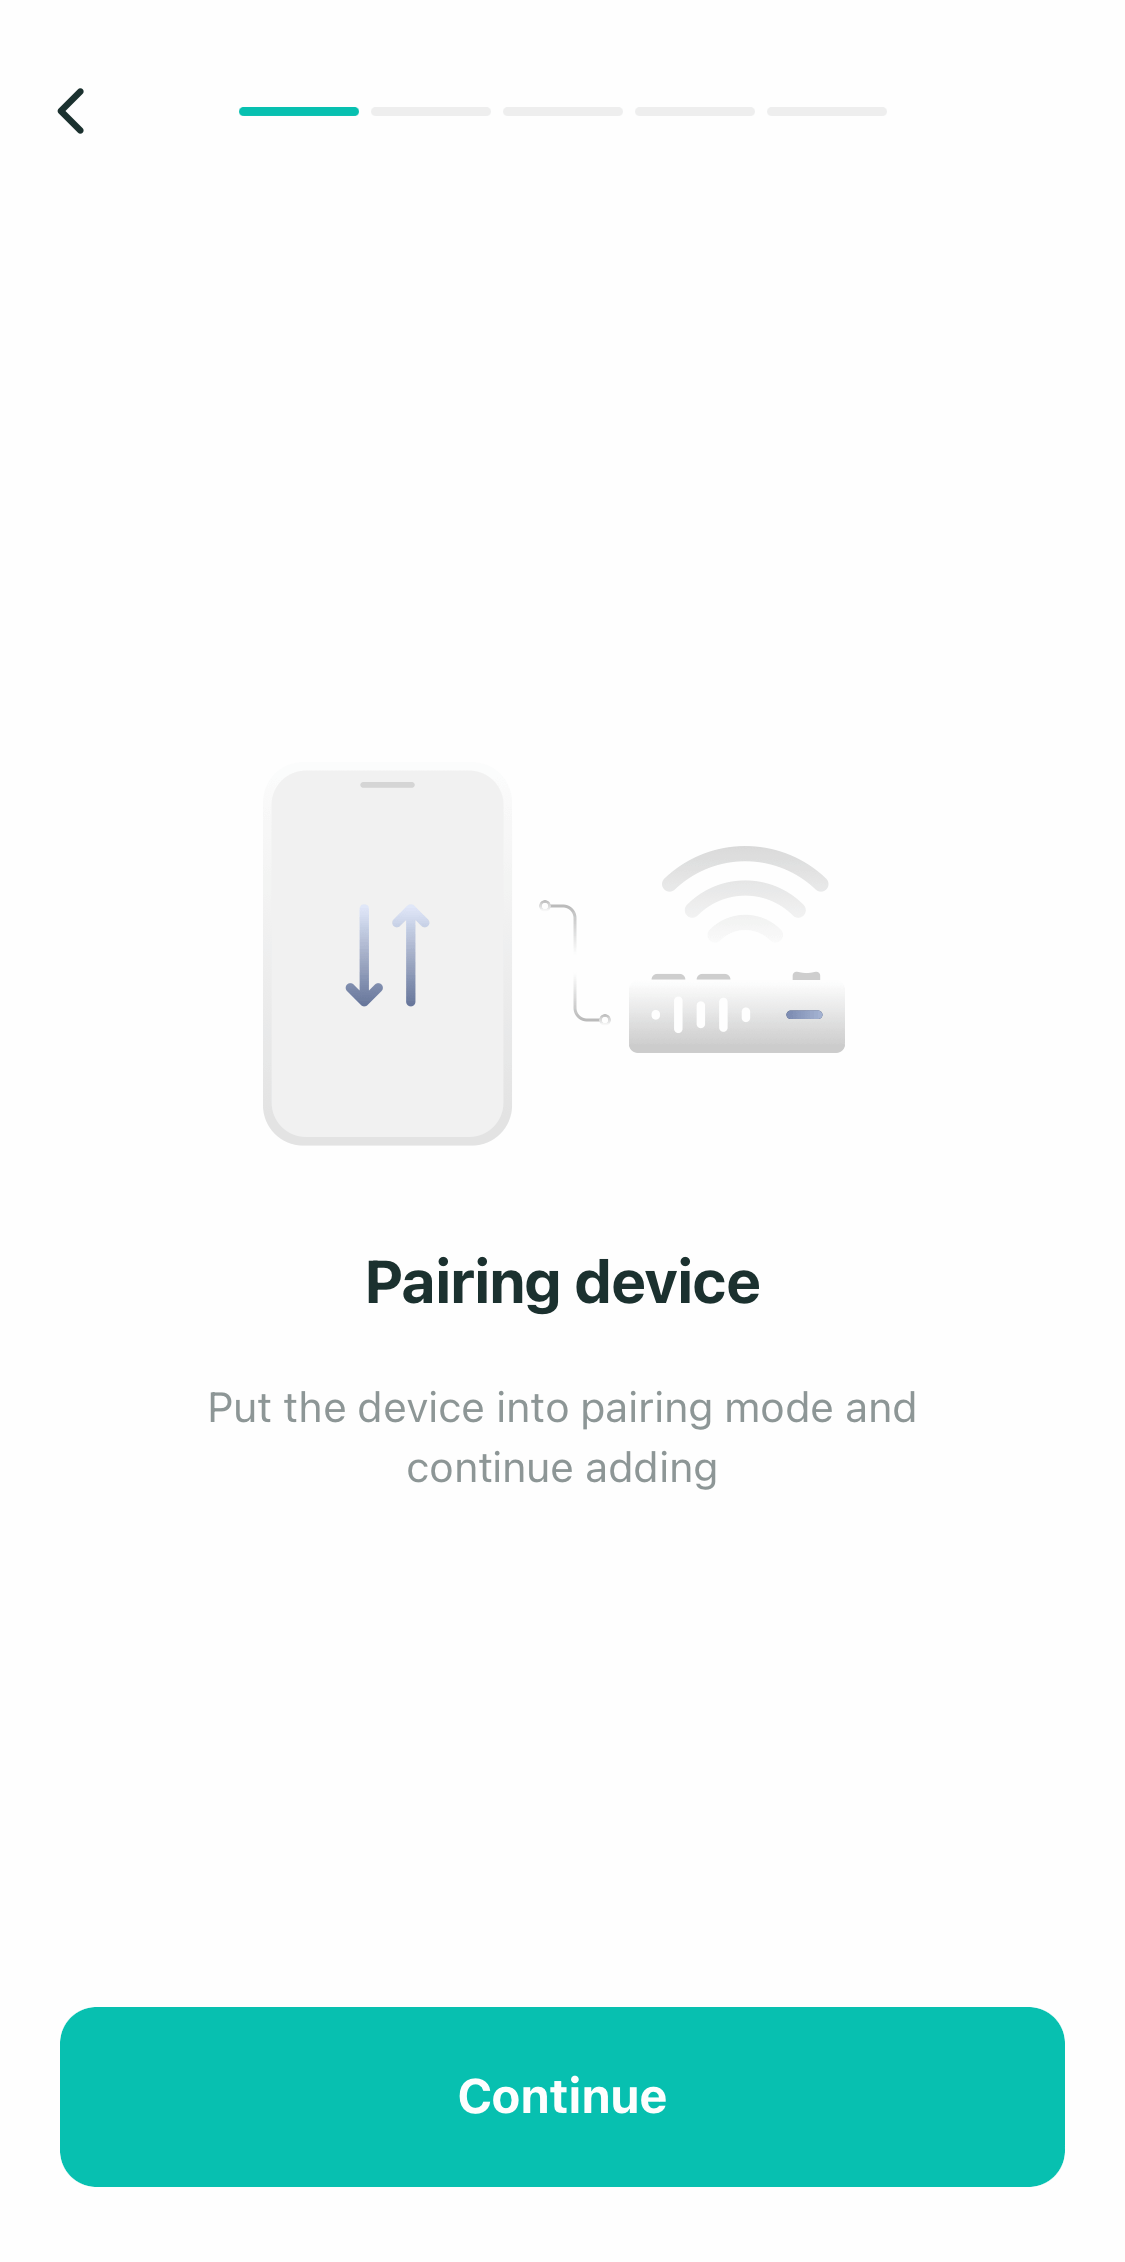 Device pairing